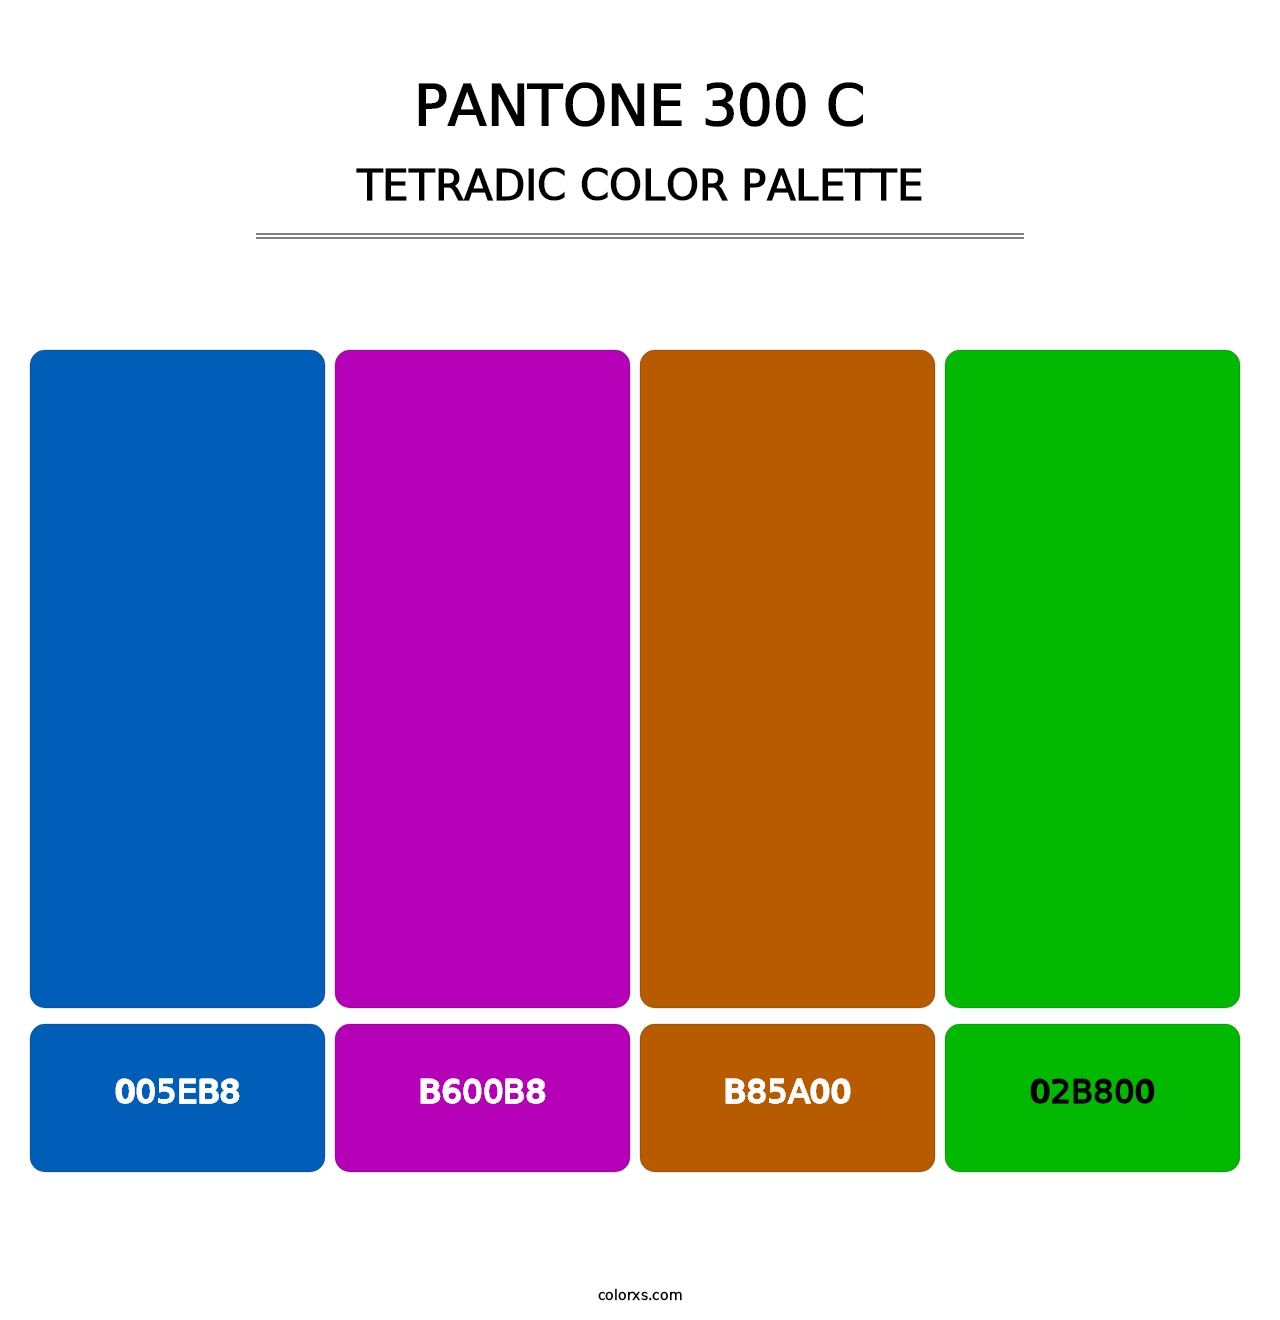 PANTONE 300 C - Tetradic Color Palette